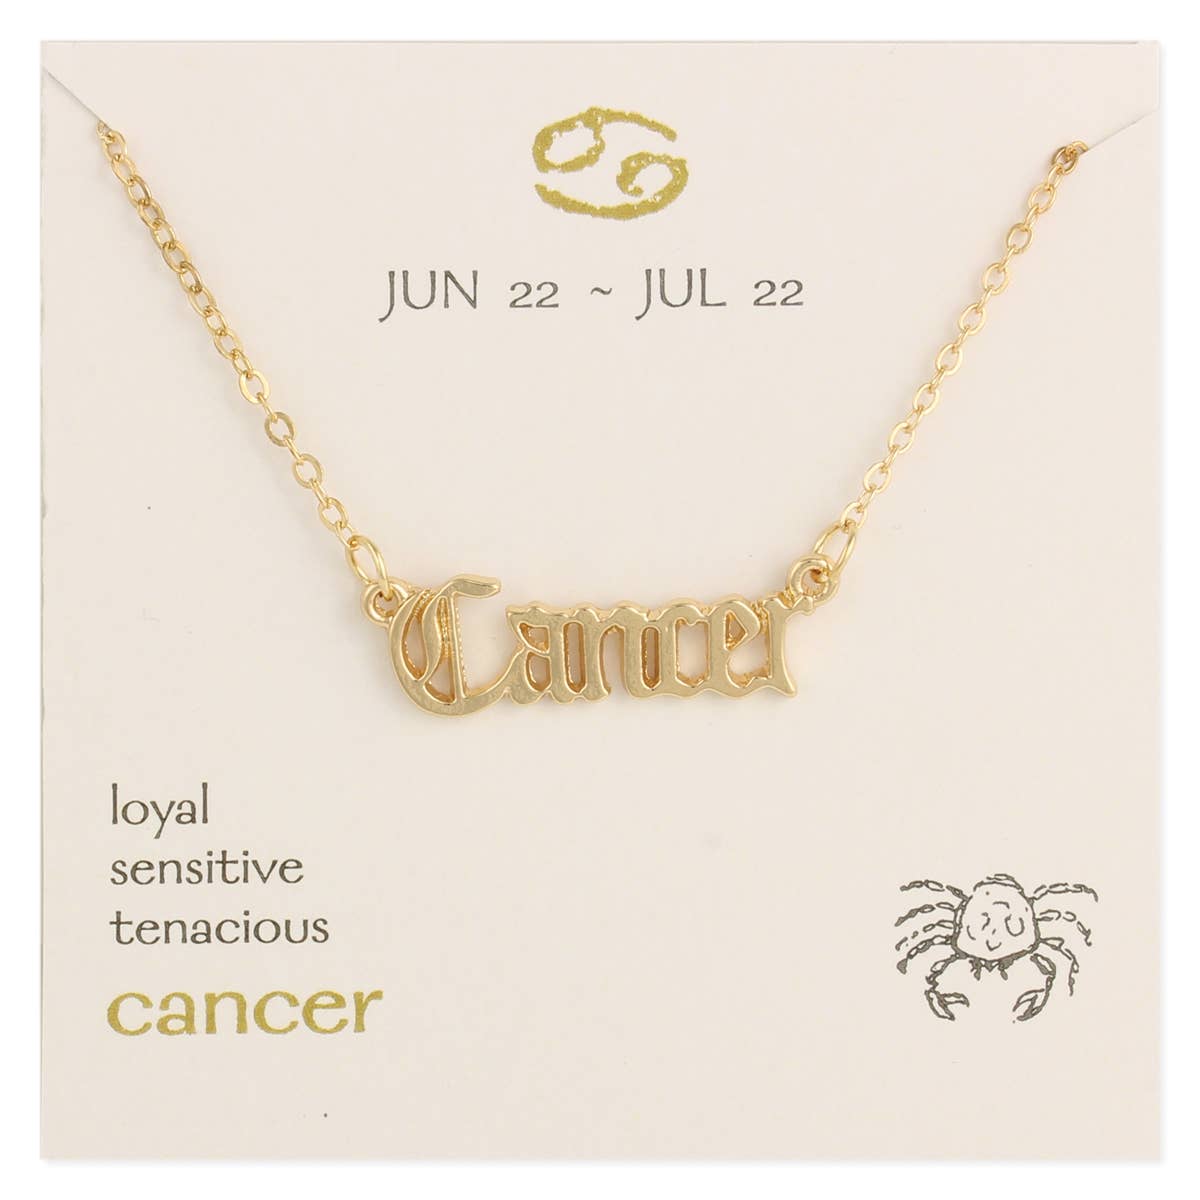 Cancer Zodiac Sign Necklace, CZ Cubic Zirconia Crystals, 16